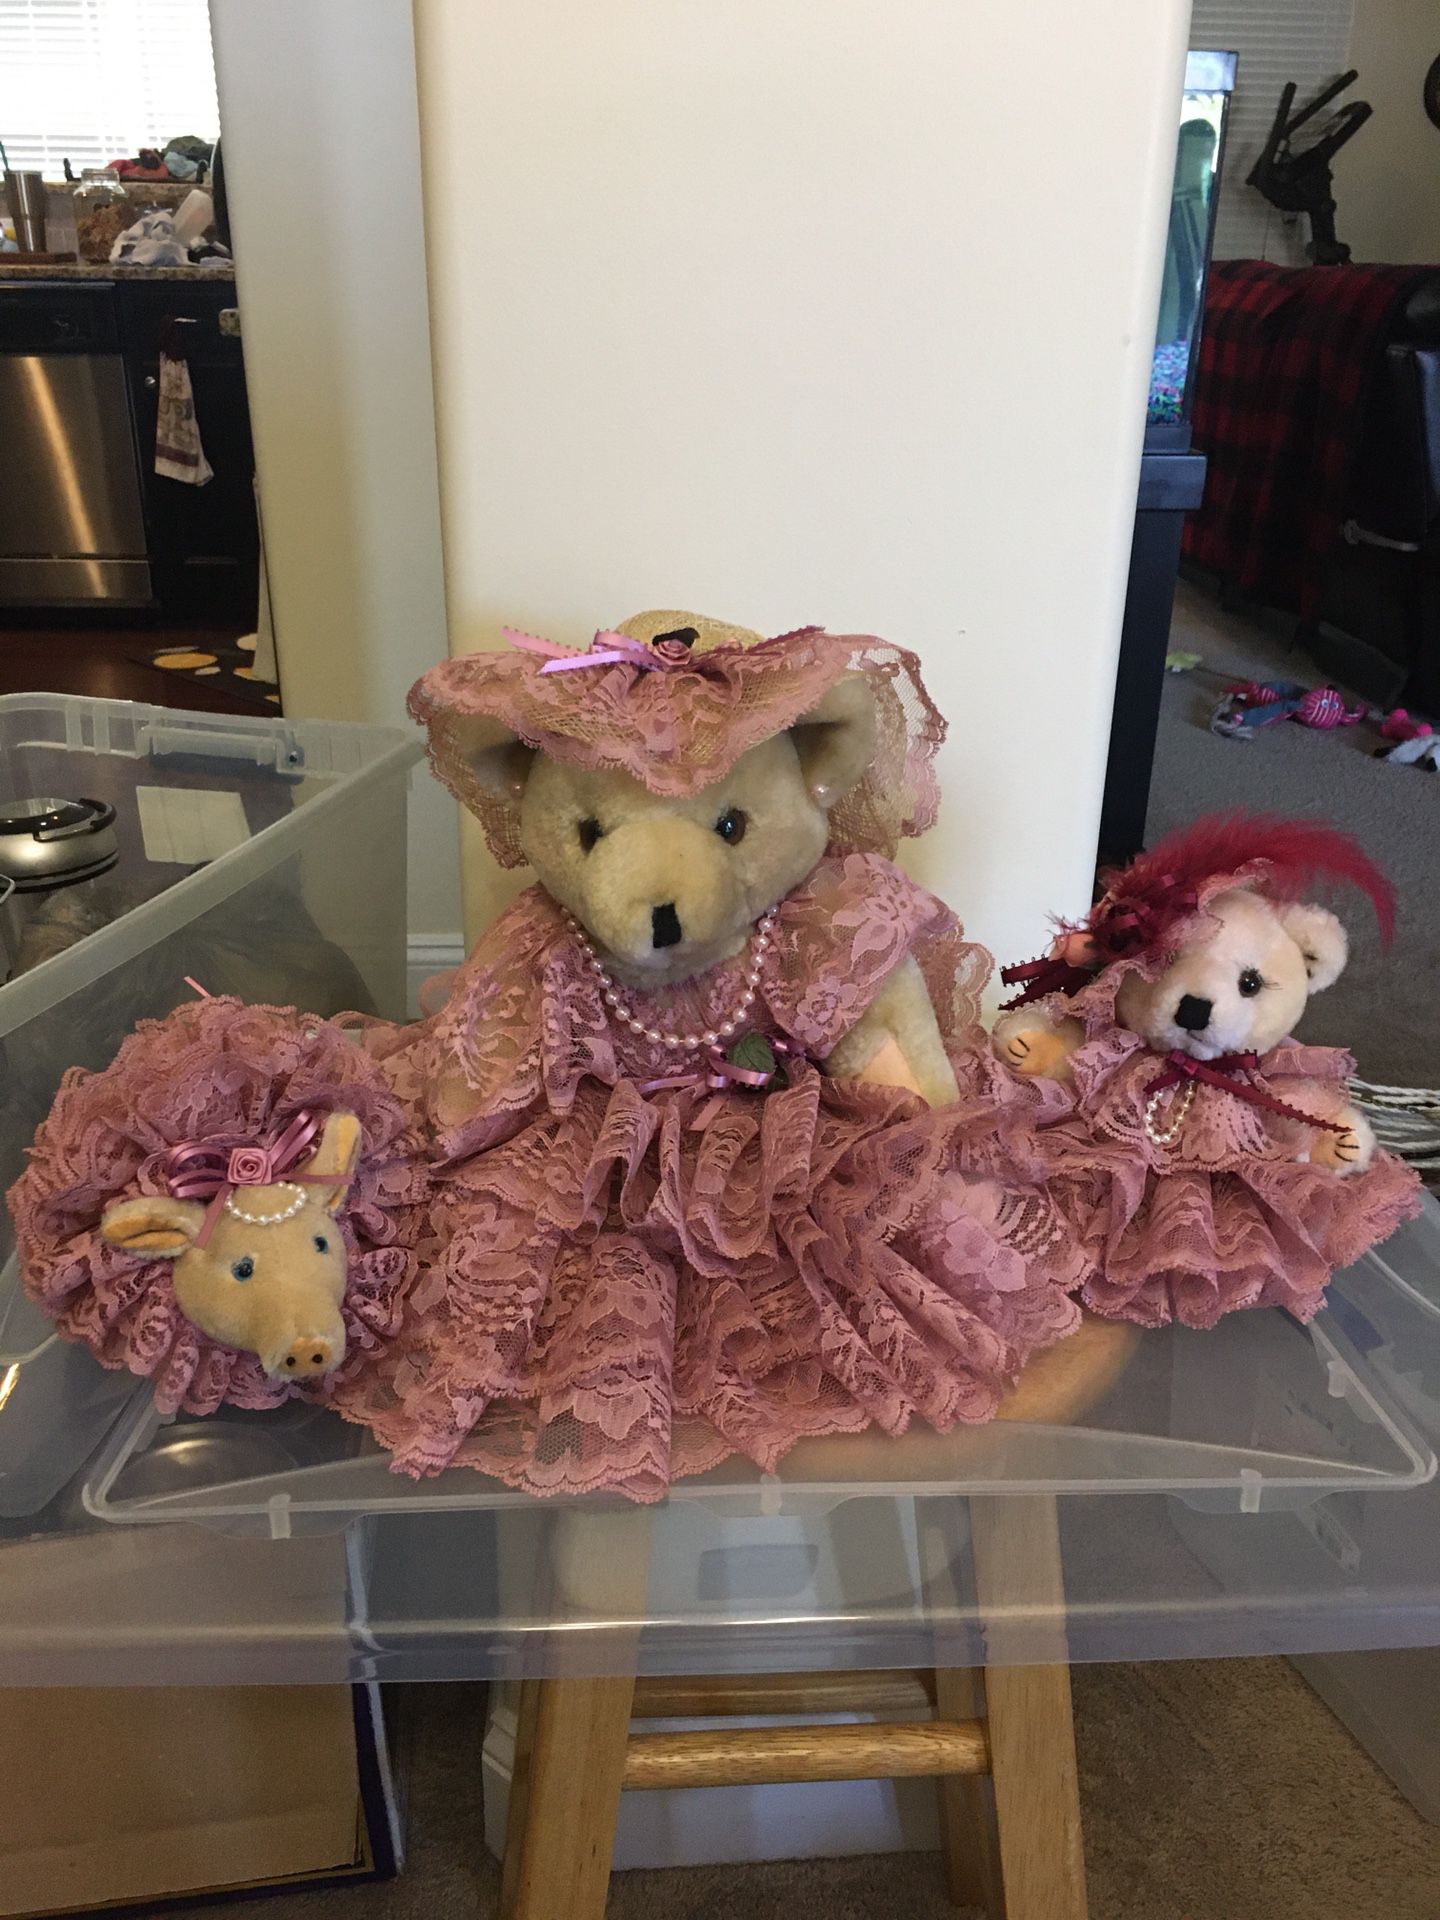 2 Decorative Stuffed Bears & Pig